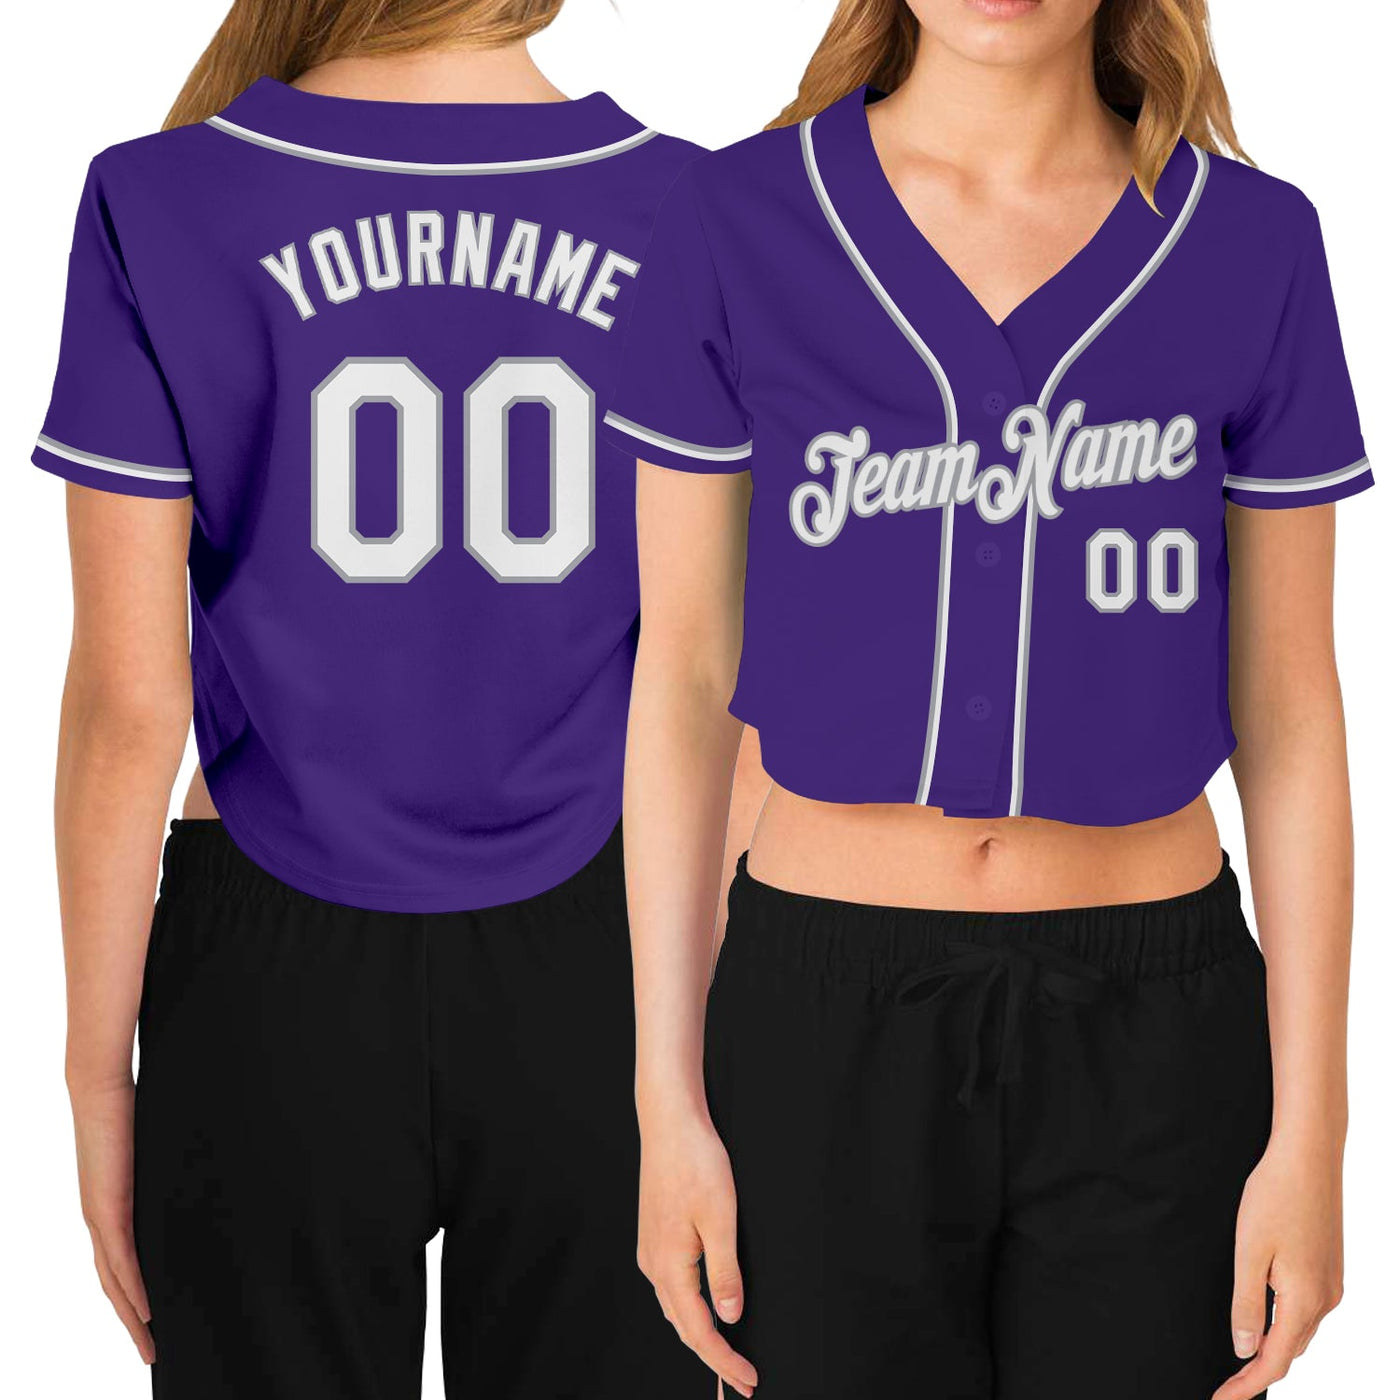 Custom Women's Purple White-Gray V-Neck Cropped Baseball Jersey - Owls Matrix LTD